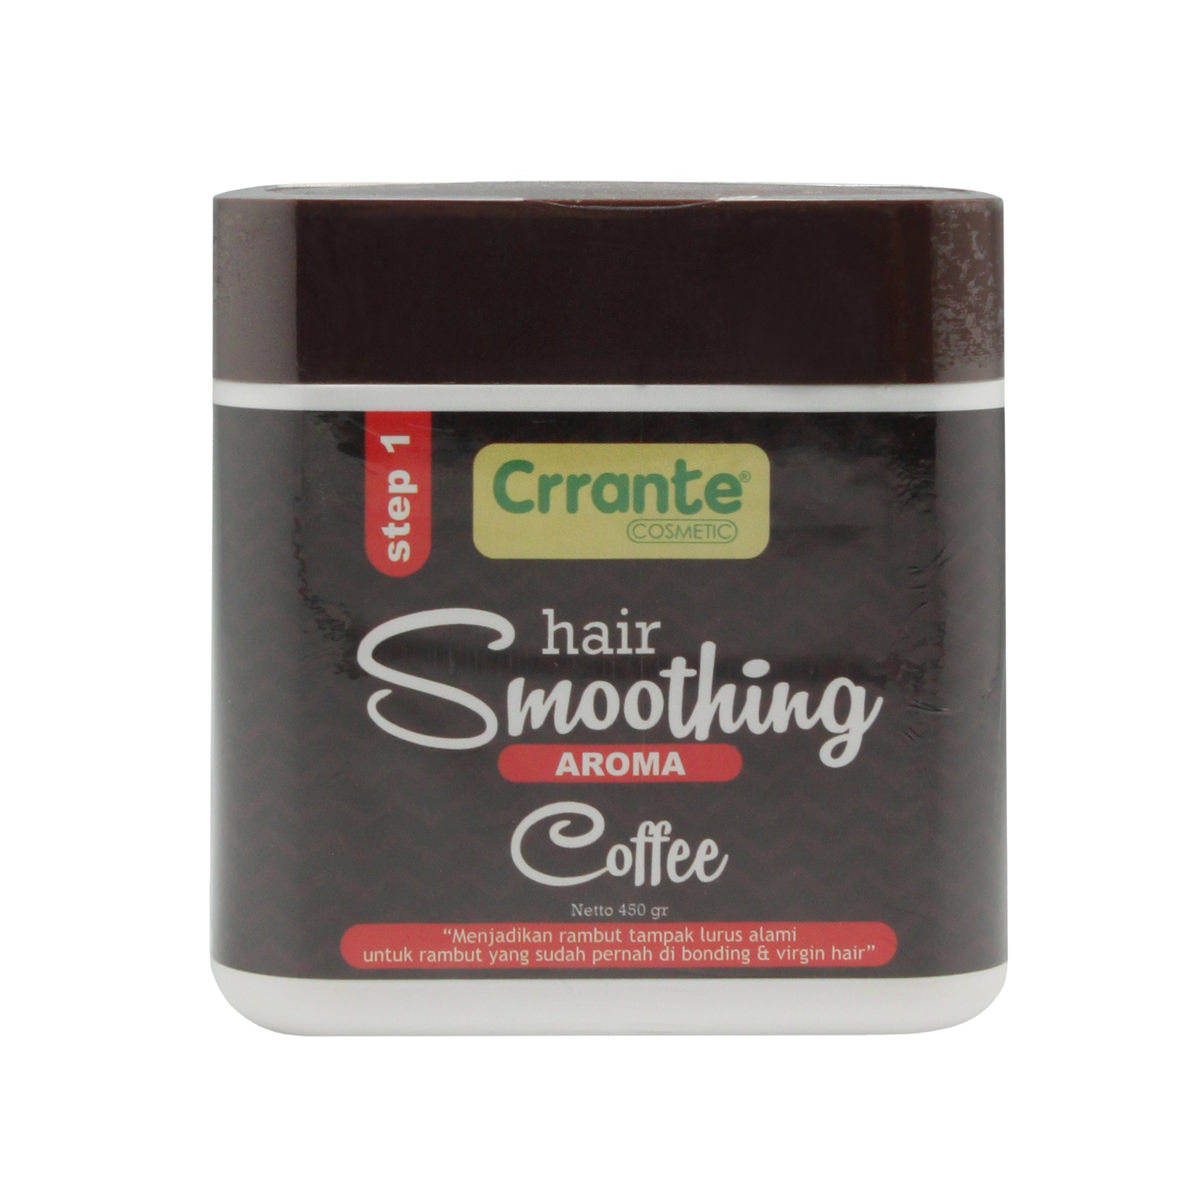 Crrante-Hair-Smoothing-Aroma-Coffee-Step-1-high-sfw(1)